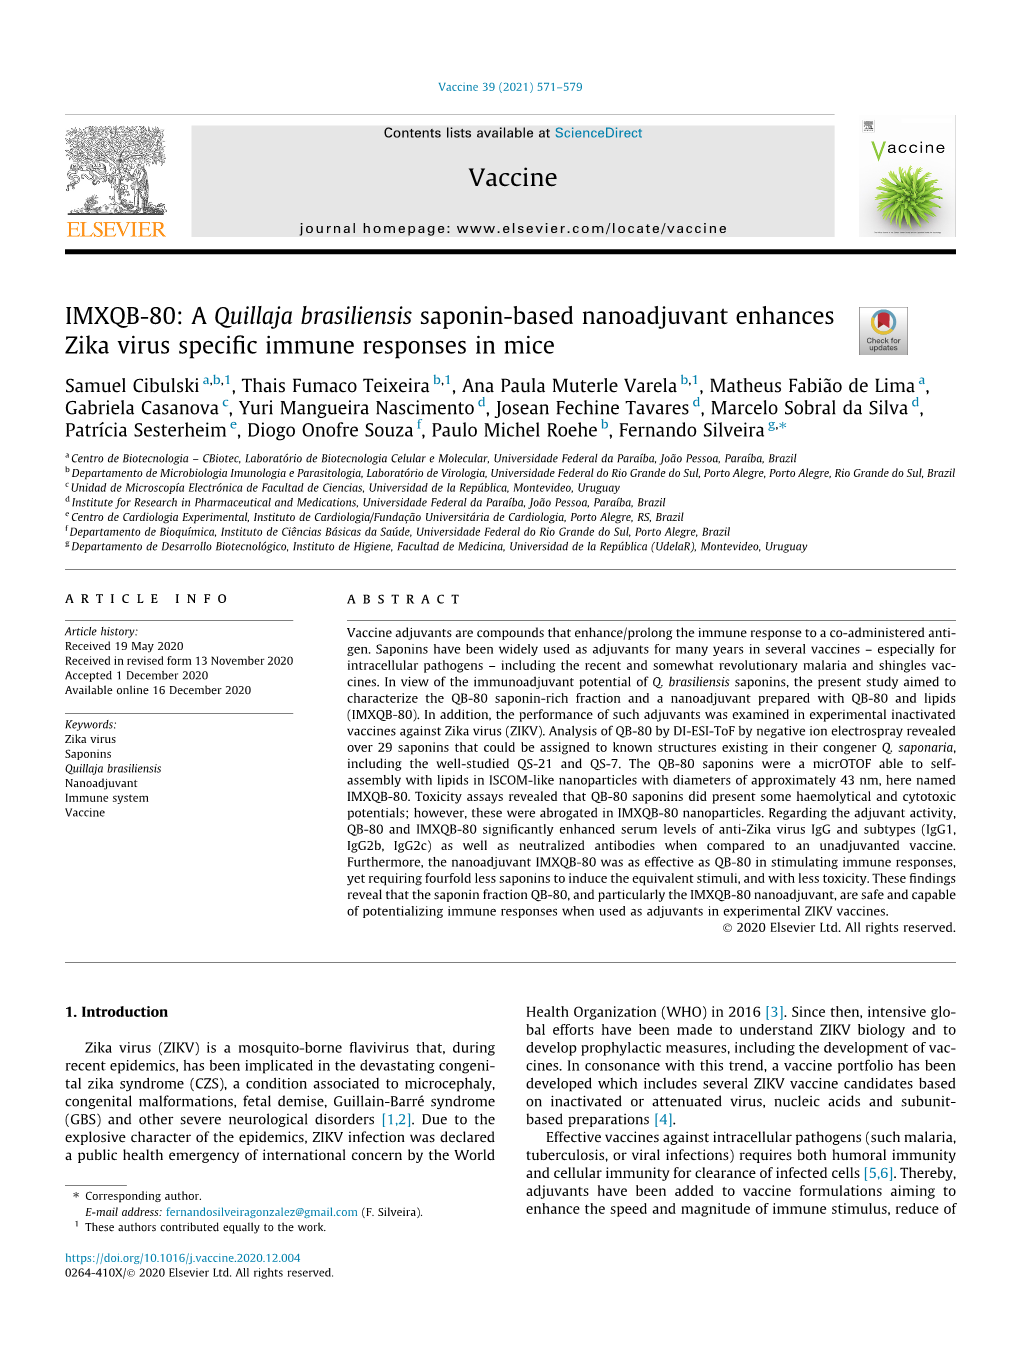 IMXQB-80: a Quillaja Brasiliensis Saponin-Based Nanoadjuvant Enhances Zika Virus Speciﬁc Immune Responses in Mice